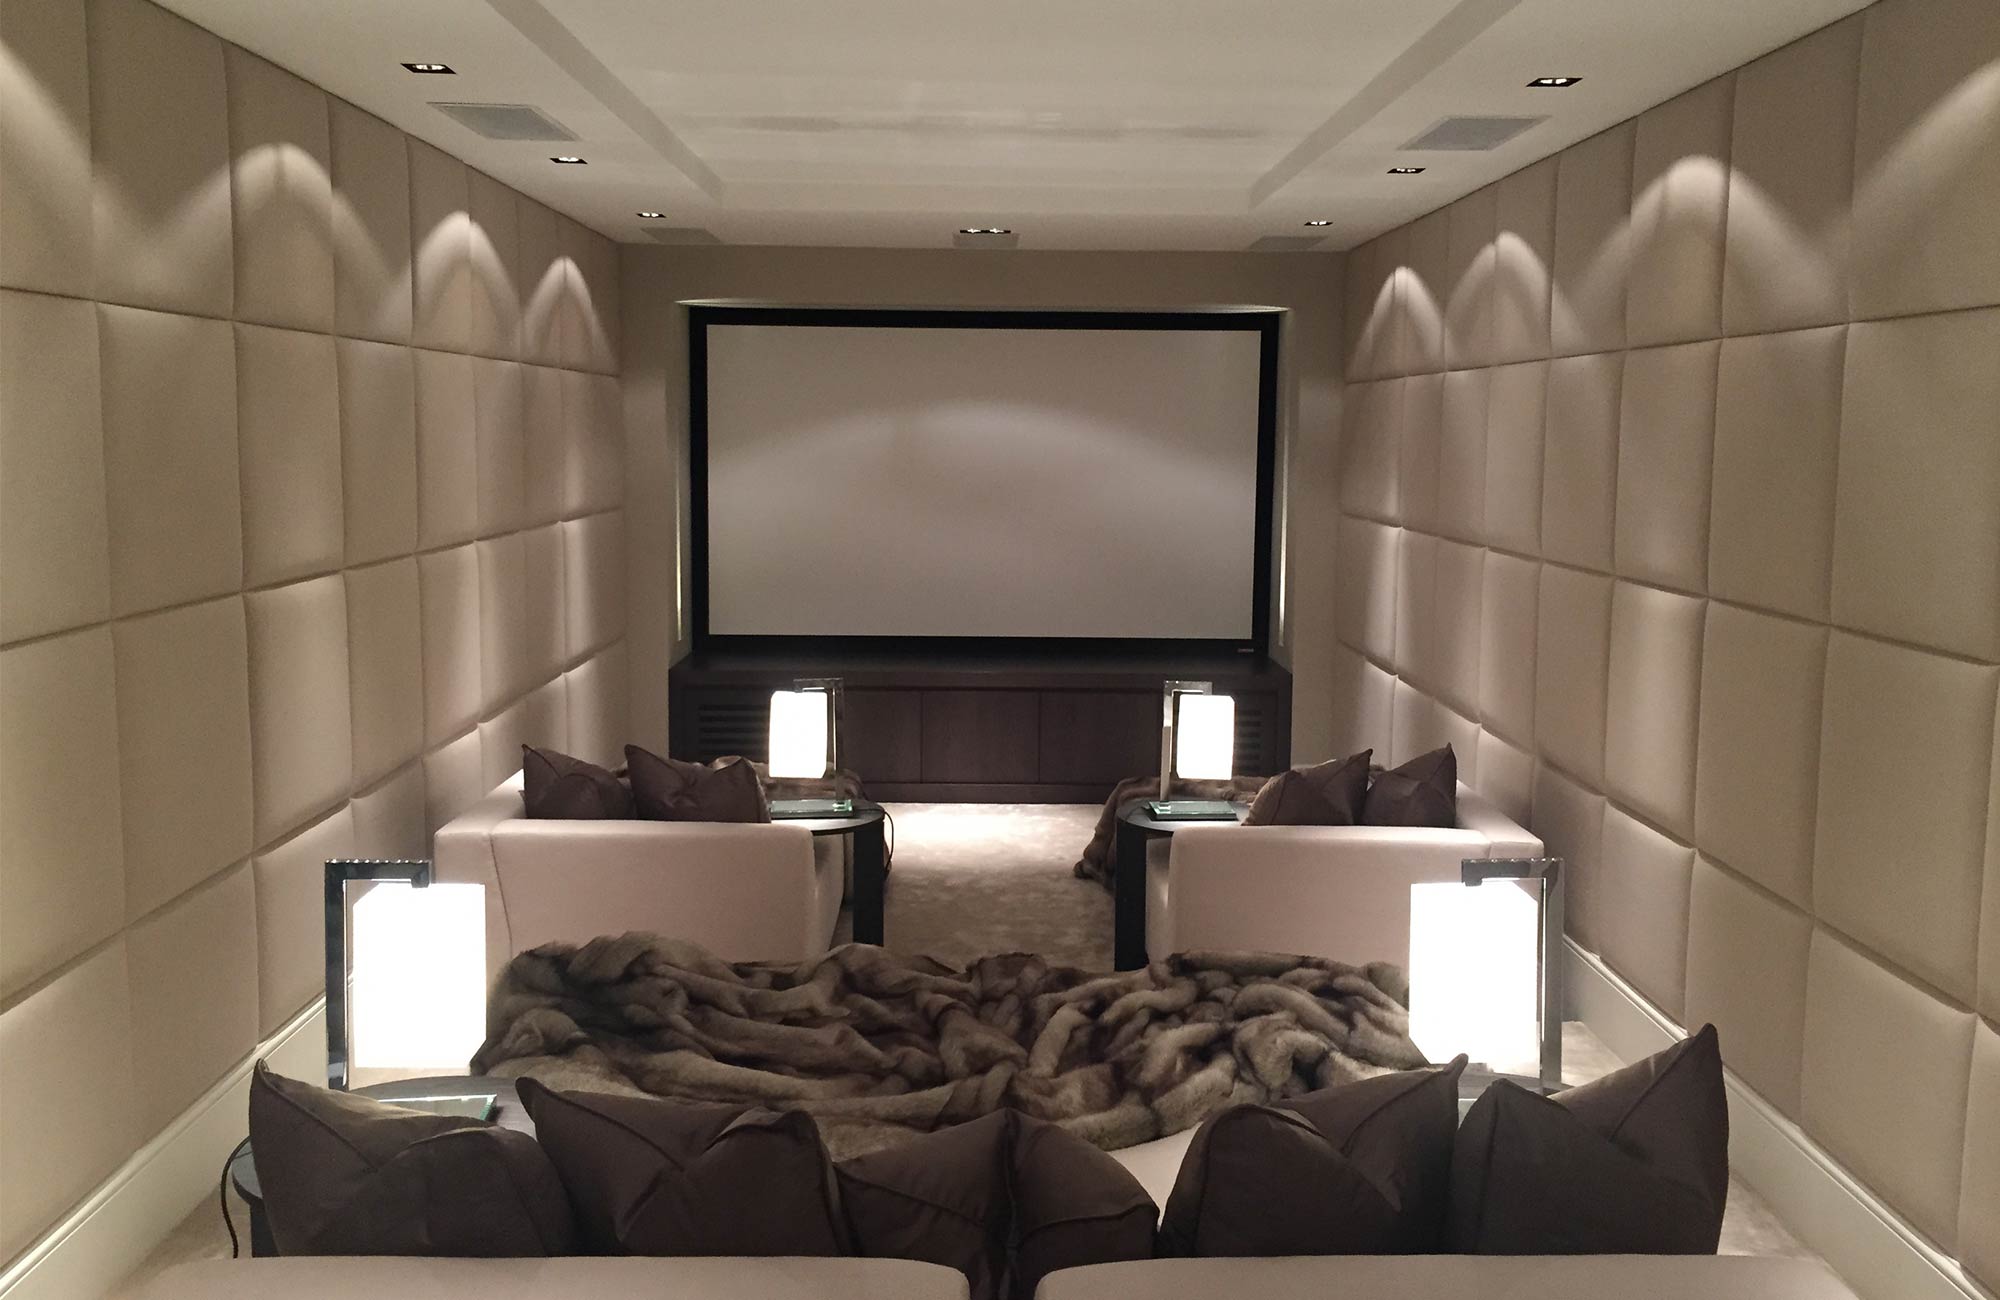 Small Cinema Rooms deserve home cinema love too!